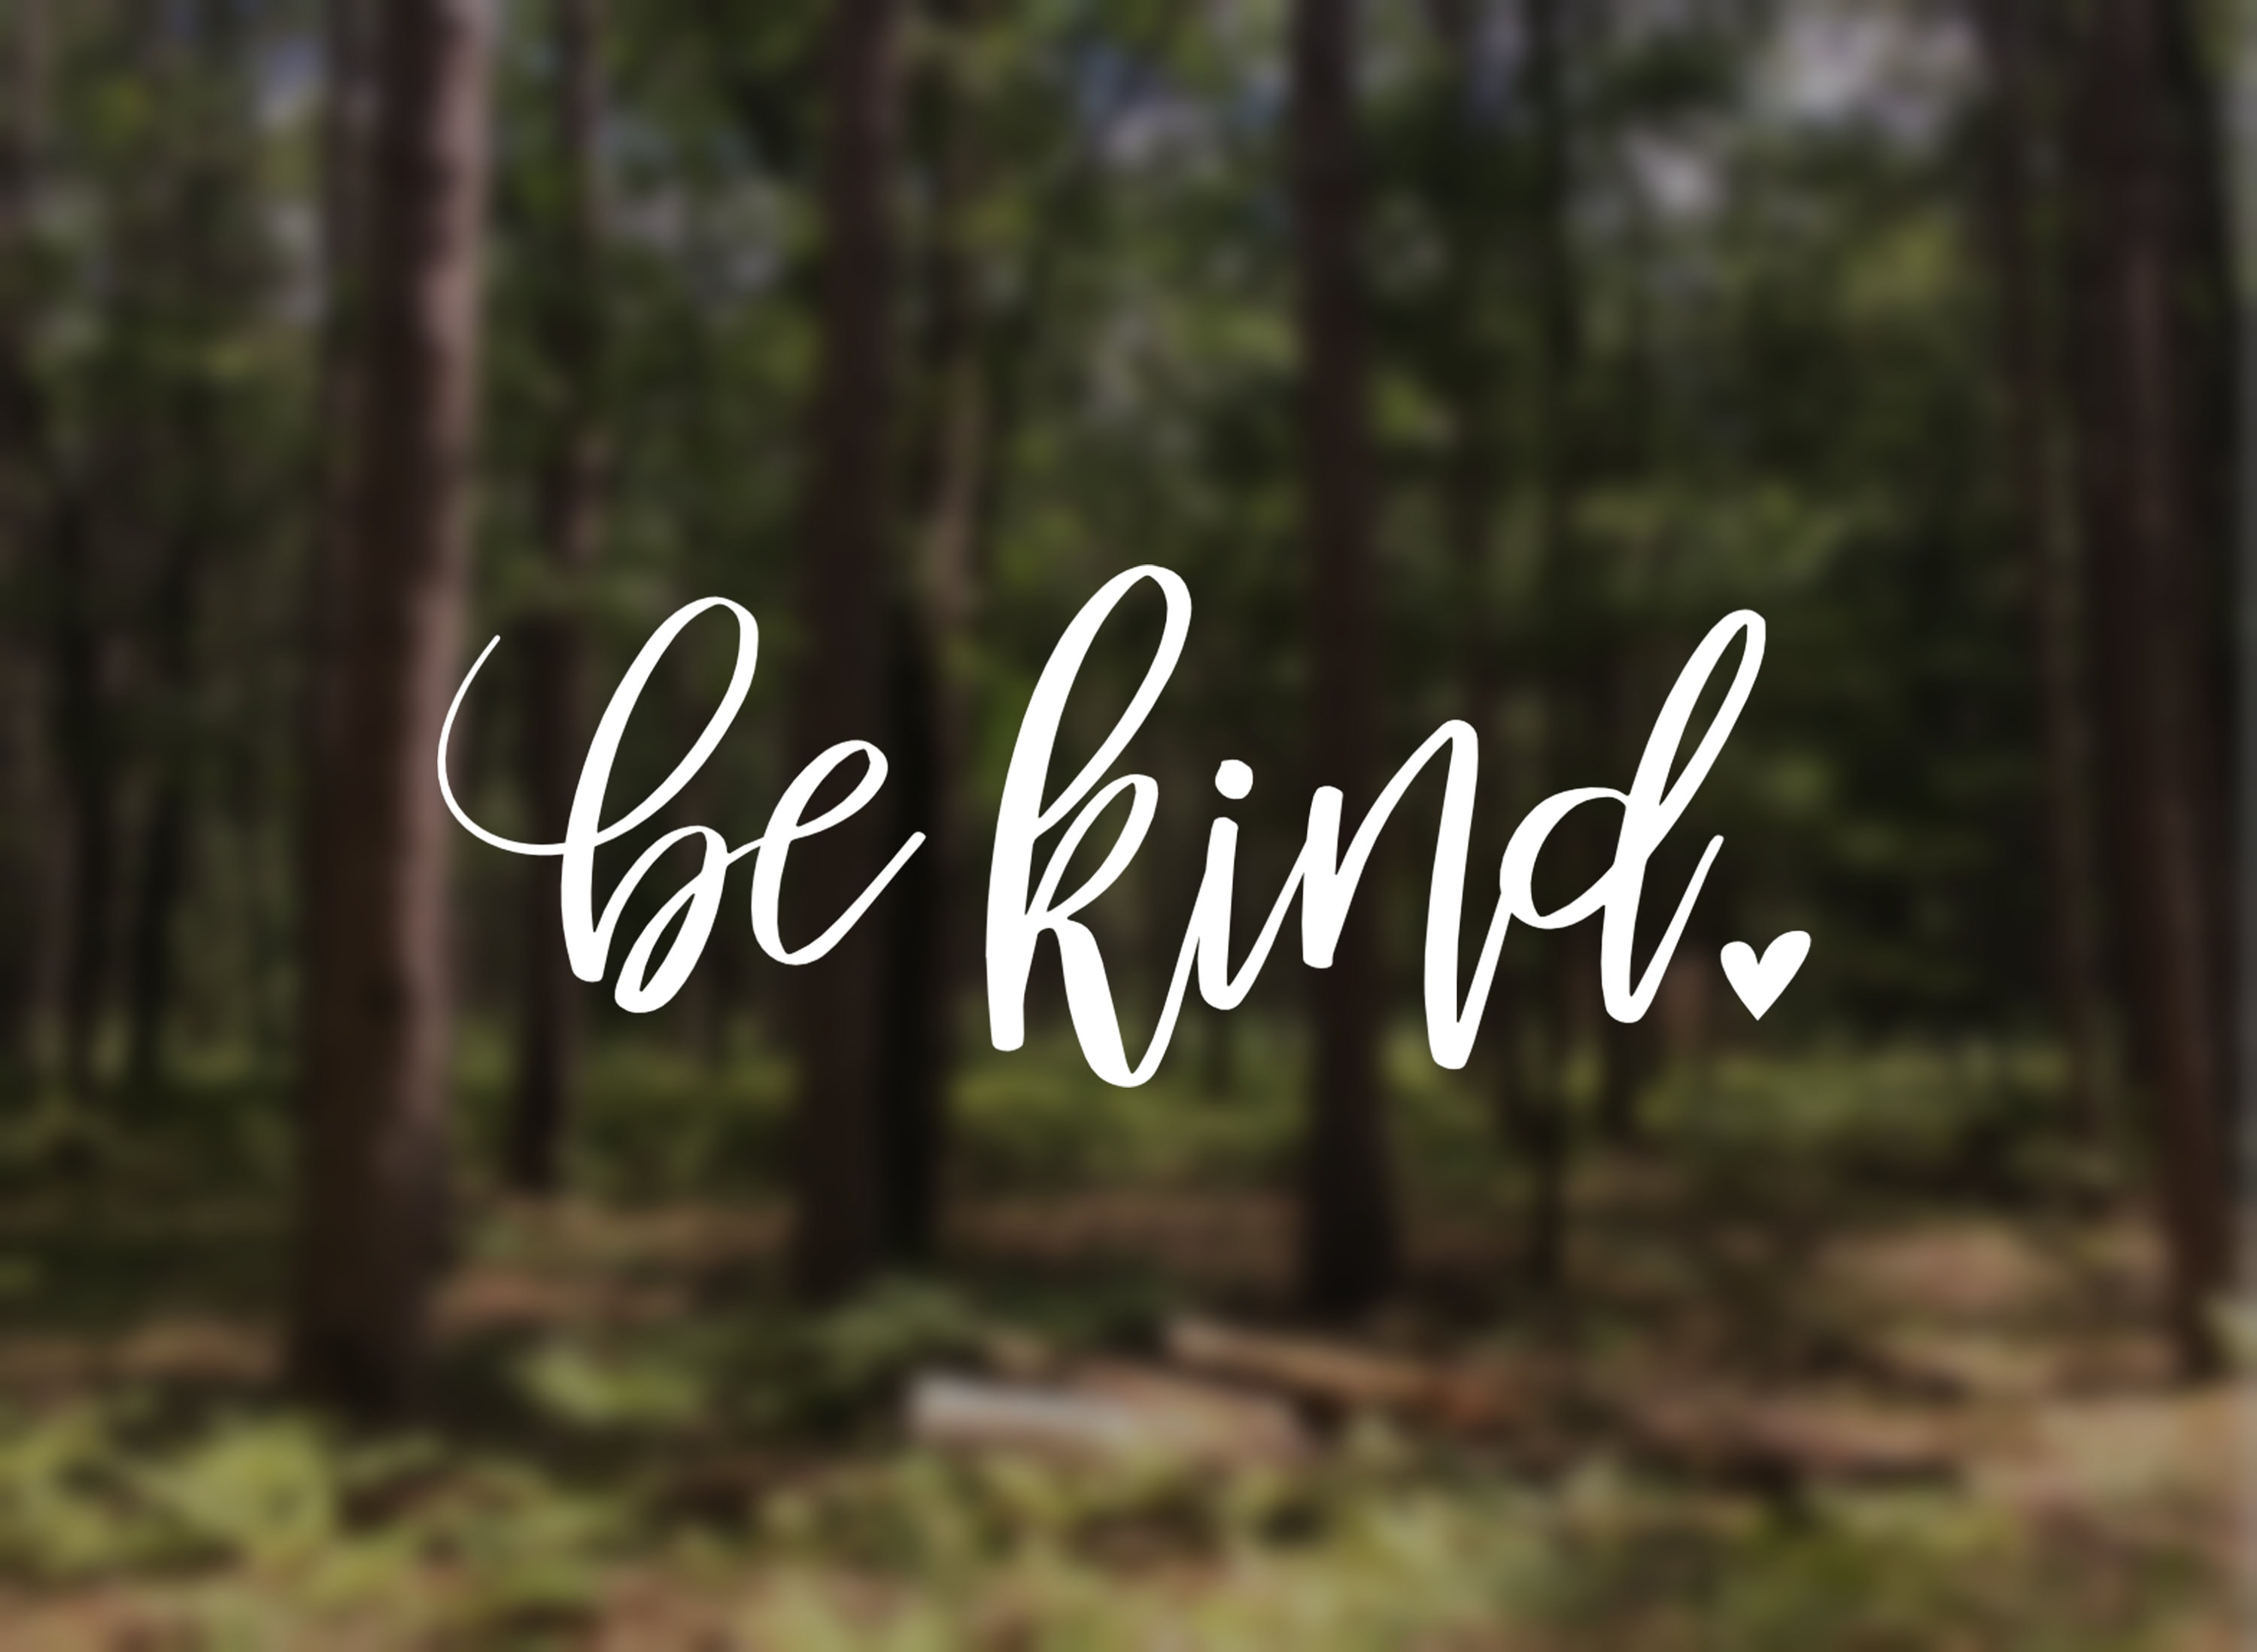 Kind To Plants - Sage Green 40 oz Tumbler – Just Be Kind Co.